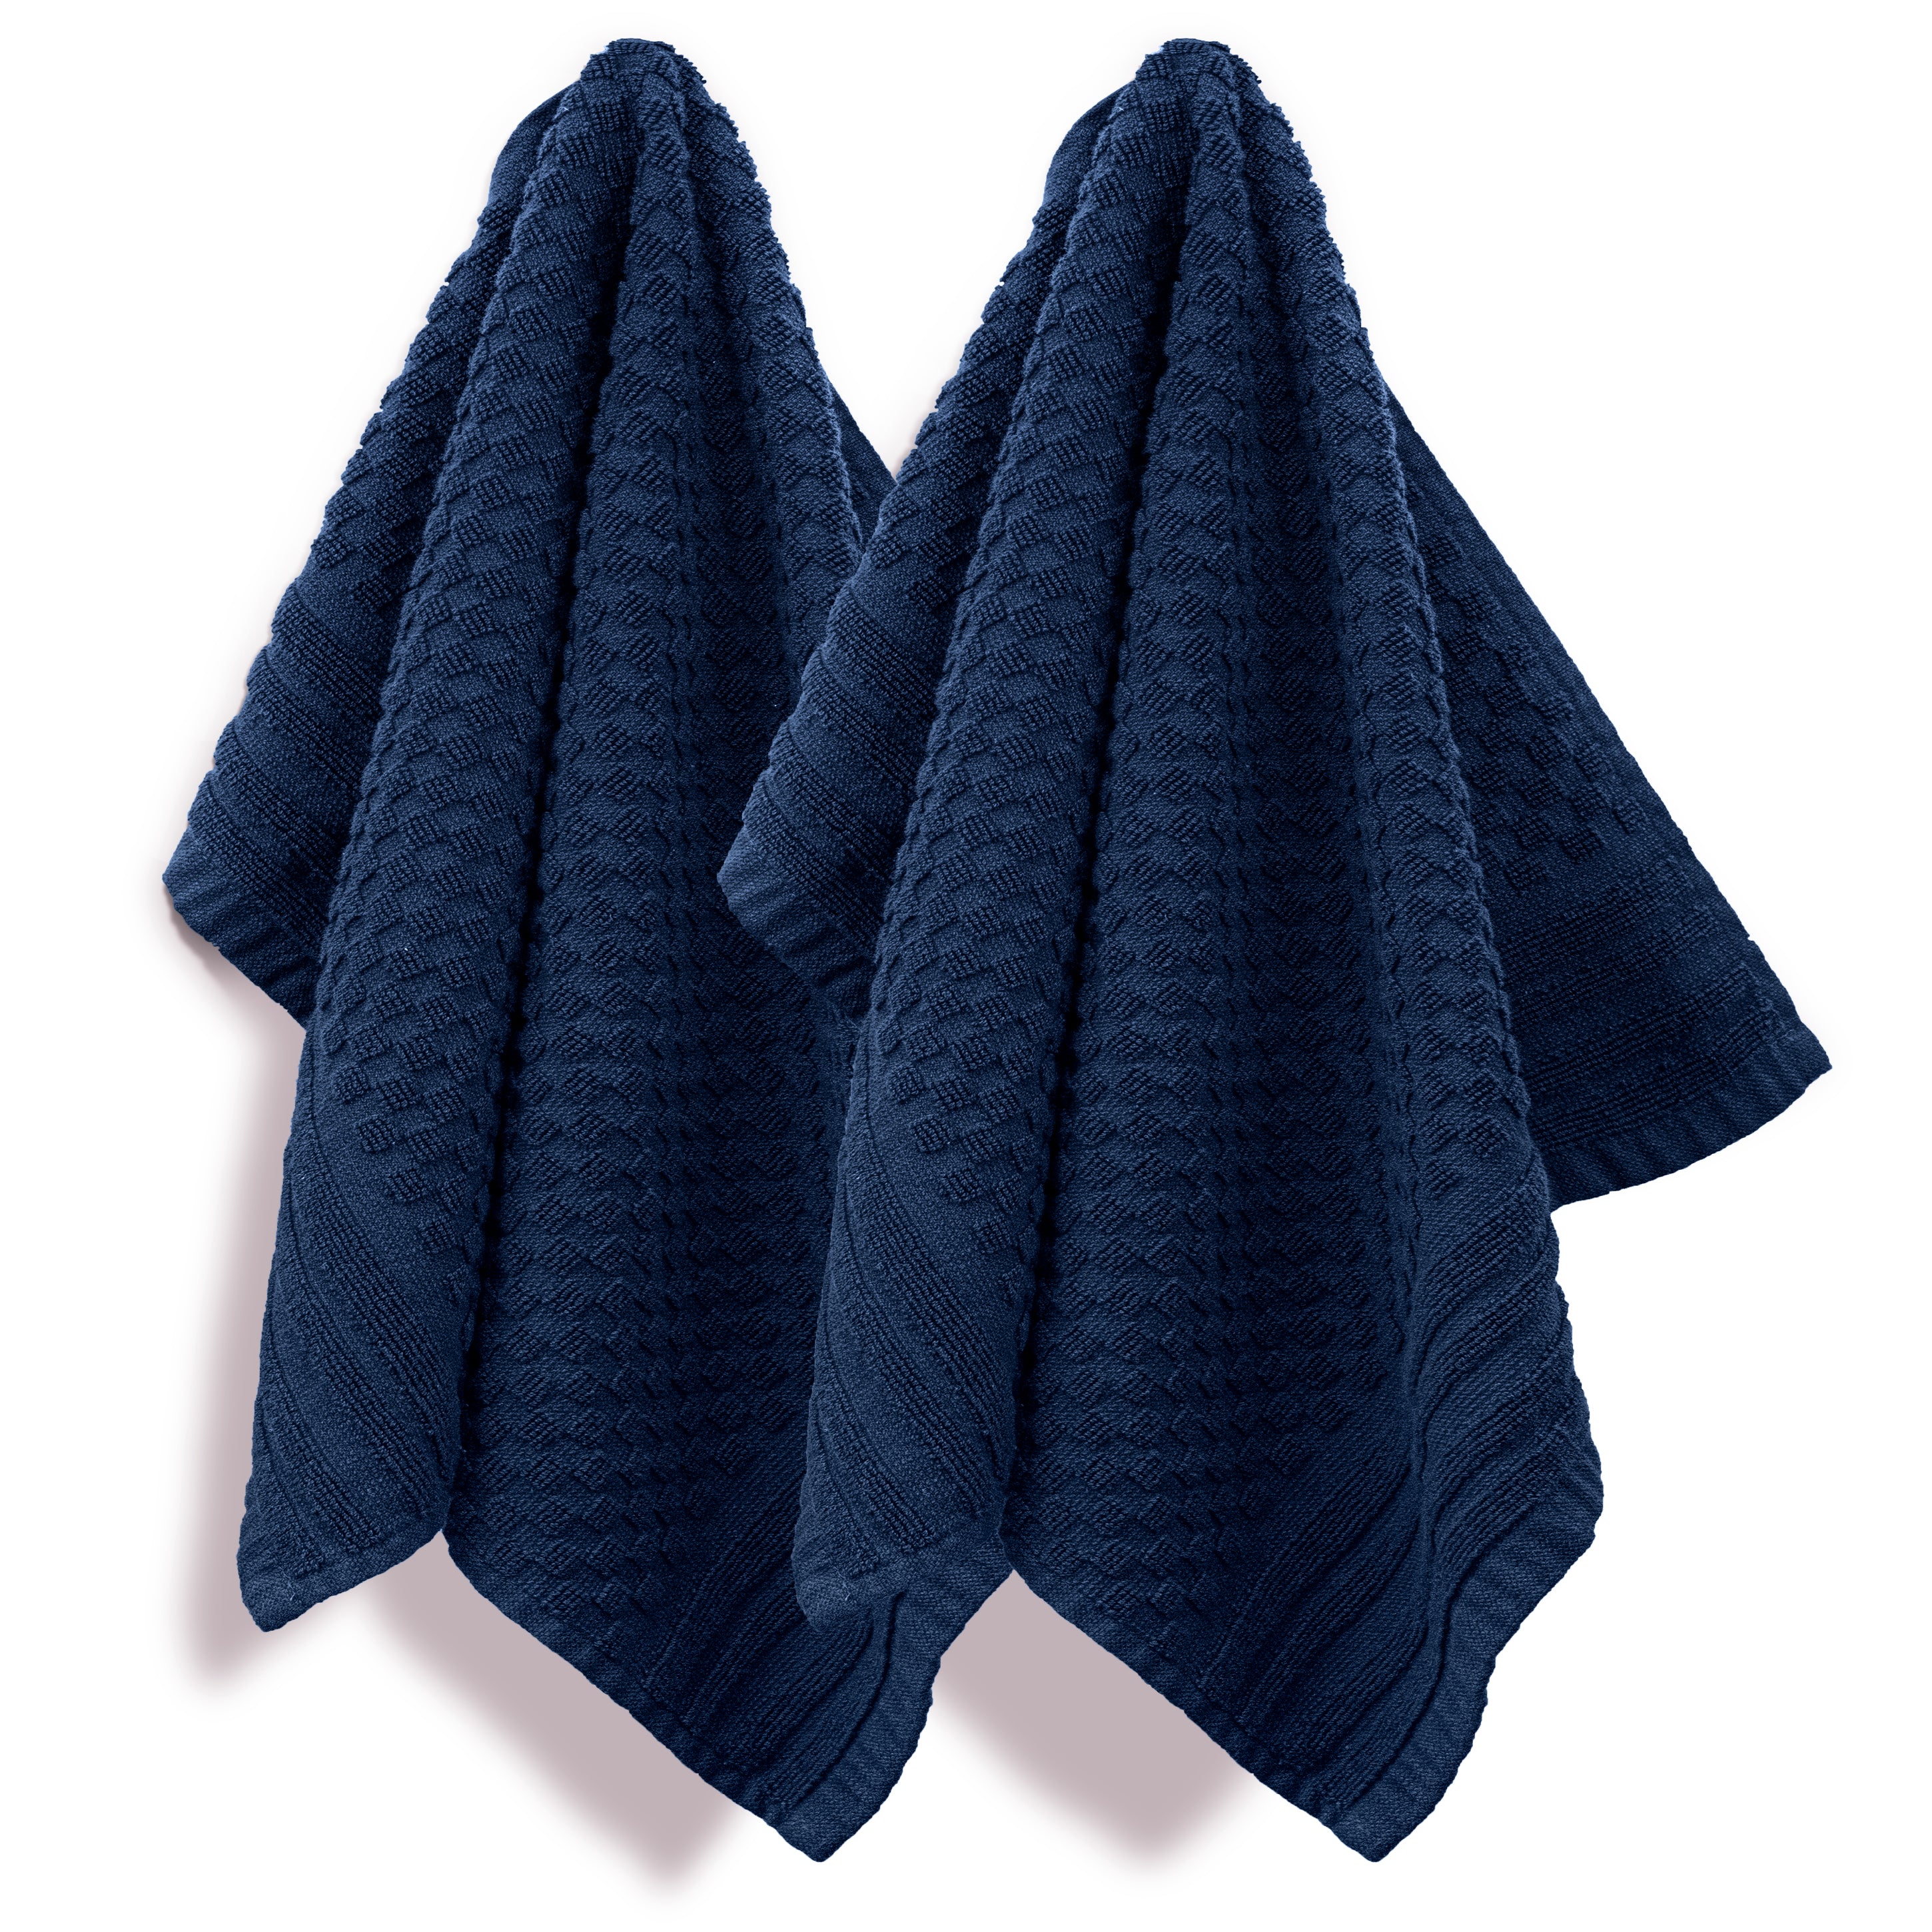 Set of 6 Kitchen Dish Towels, 100% Cotton Kitchen Towels, Stripe, Navy Blue